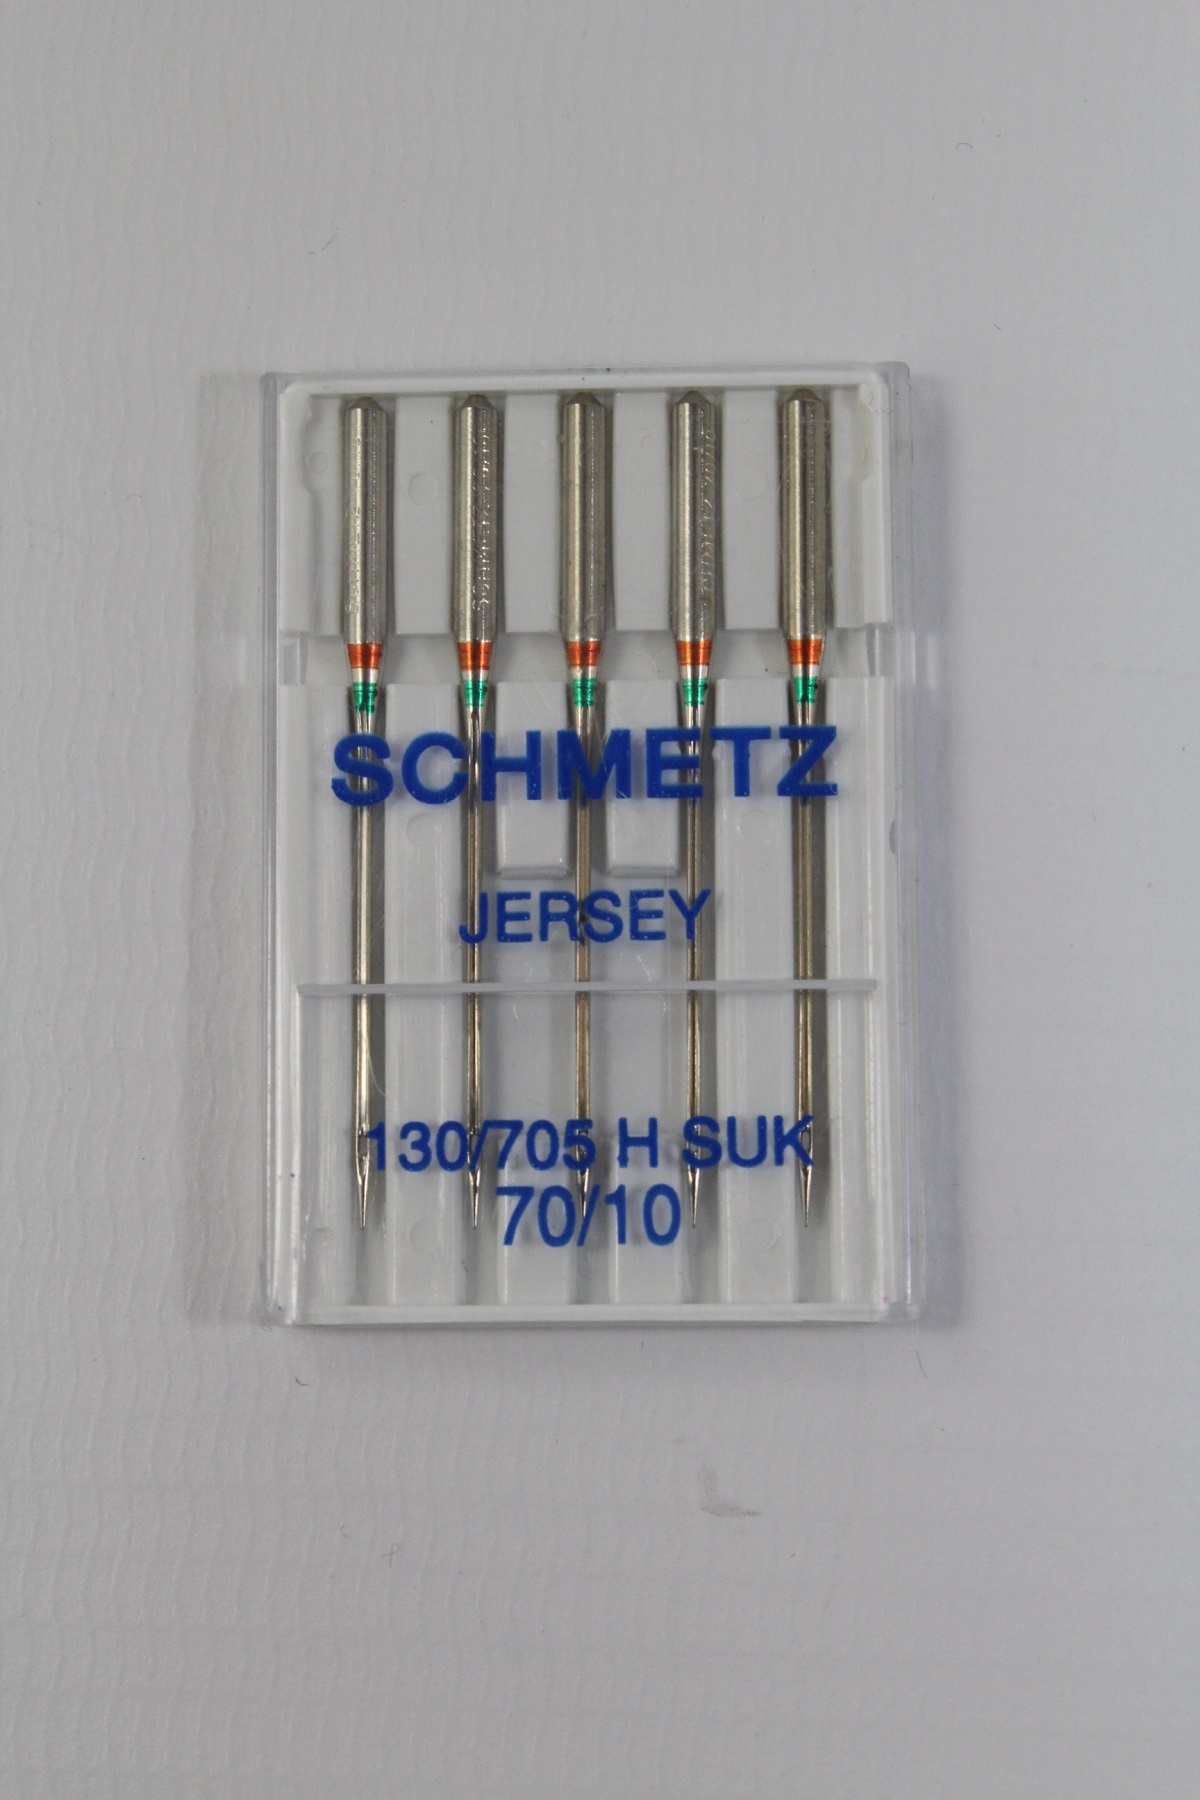 Schmetz Jersey 130/705 H SUK 70/10